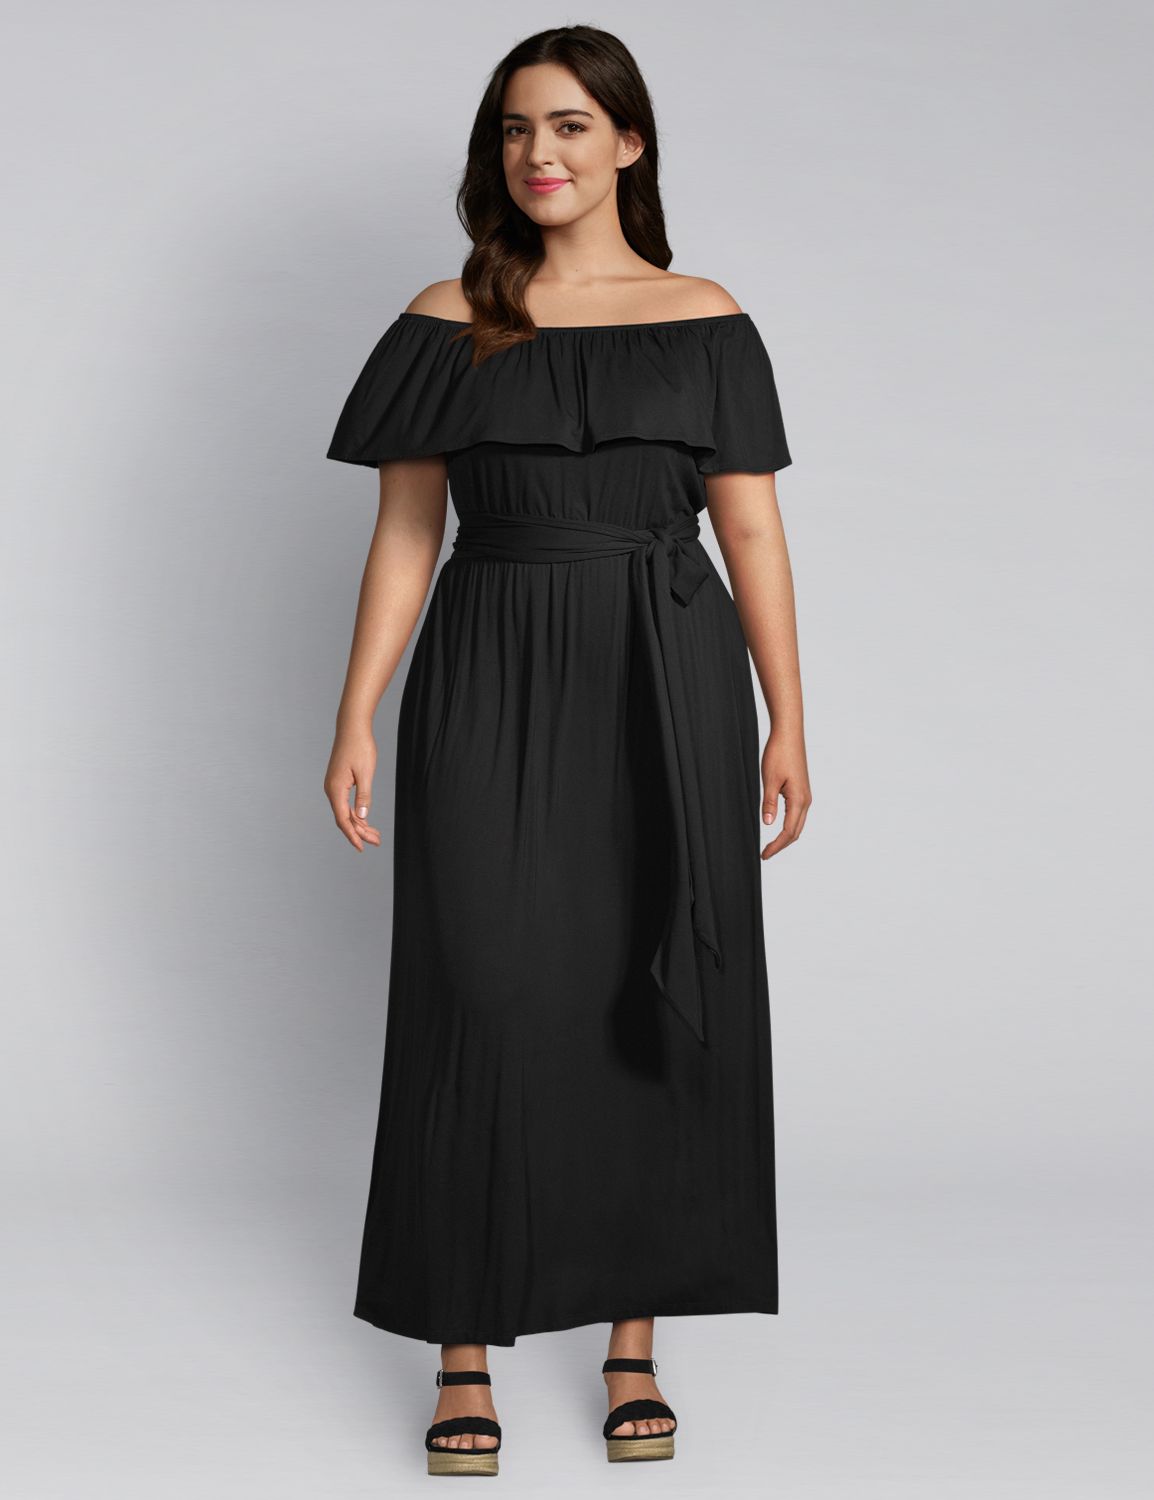 black dresses for plus size ladies